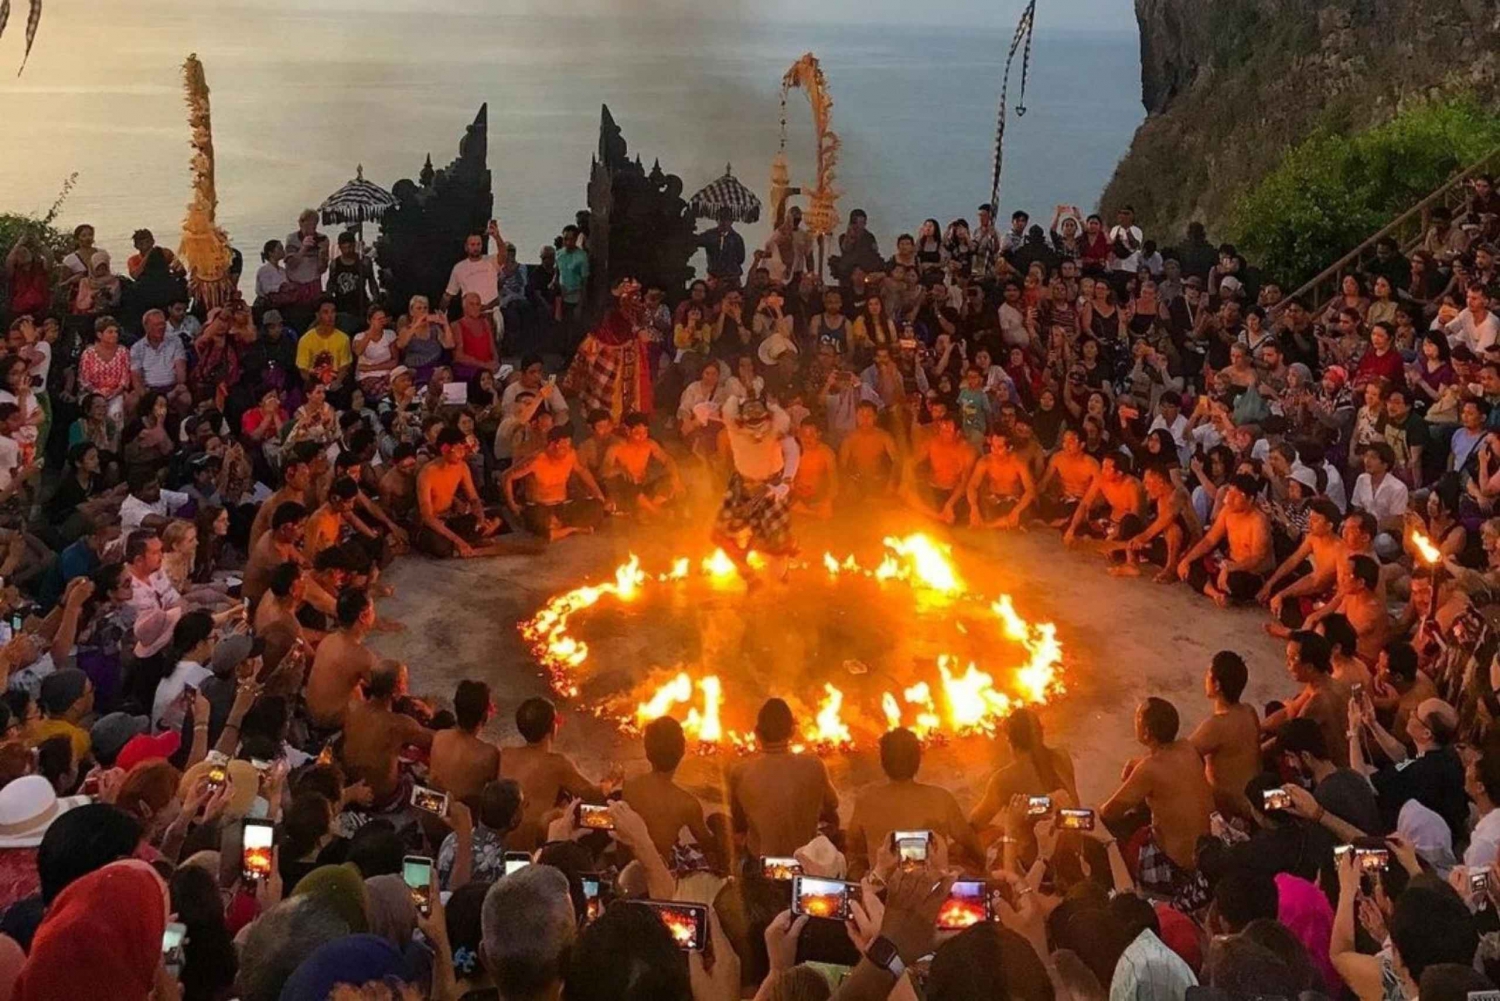 Bali: Uluwatu Temple, Beaches and Fire kecak Dance Tour